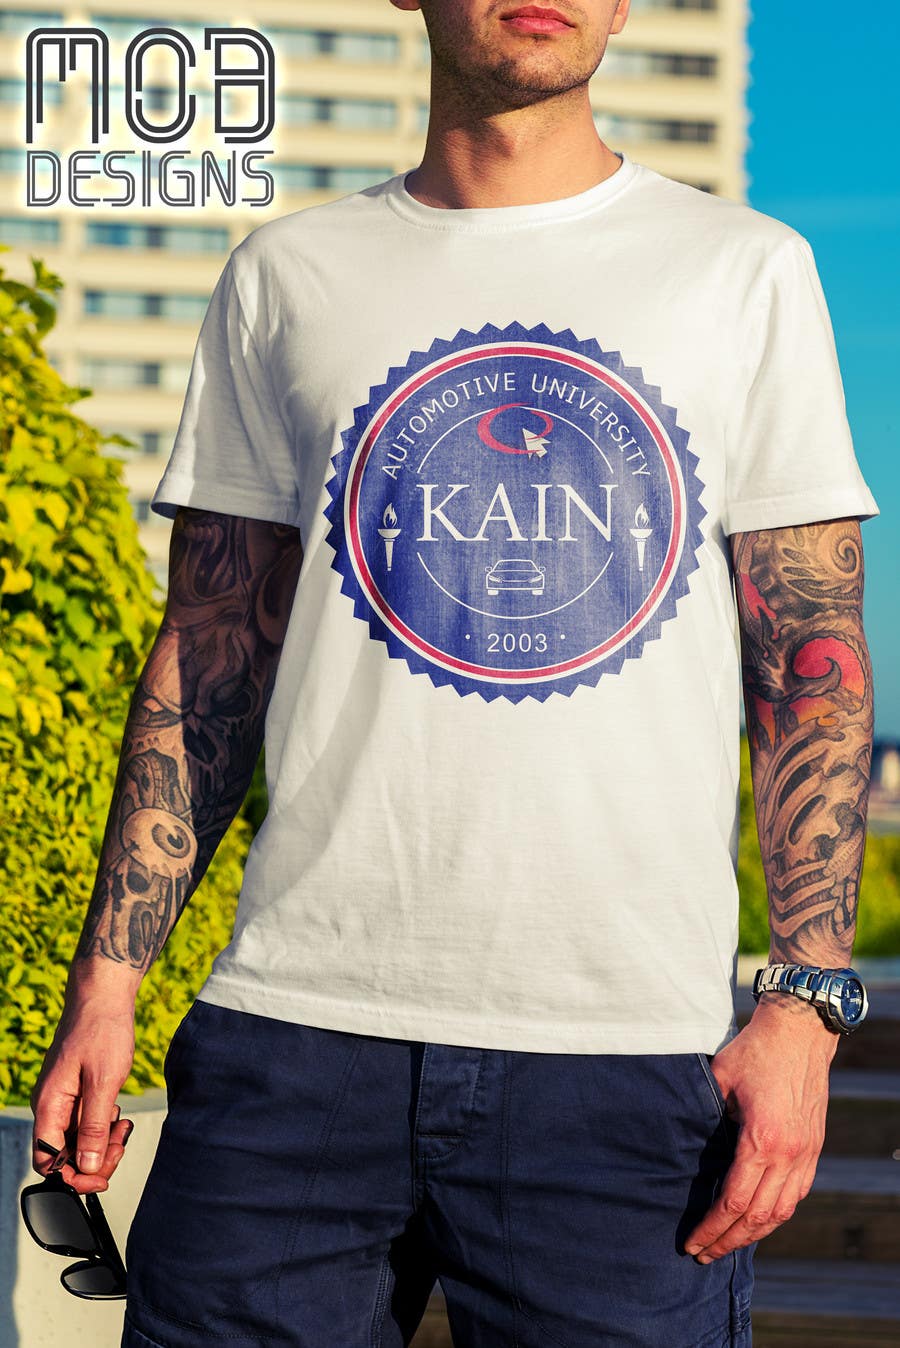 Participación en el concurso Nro.33 para                                                 Design for a t-shirt for Kain University using our current logo in a distressed look
                                            